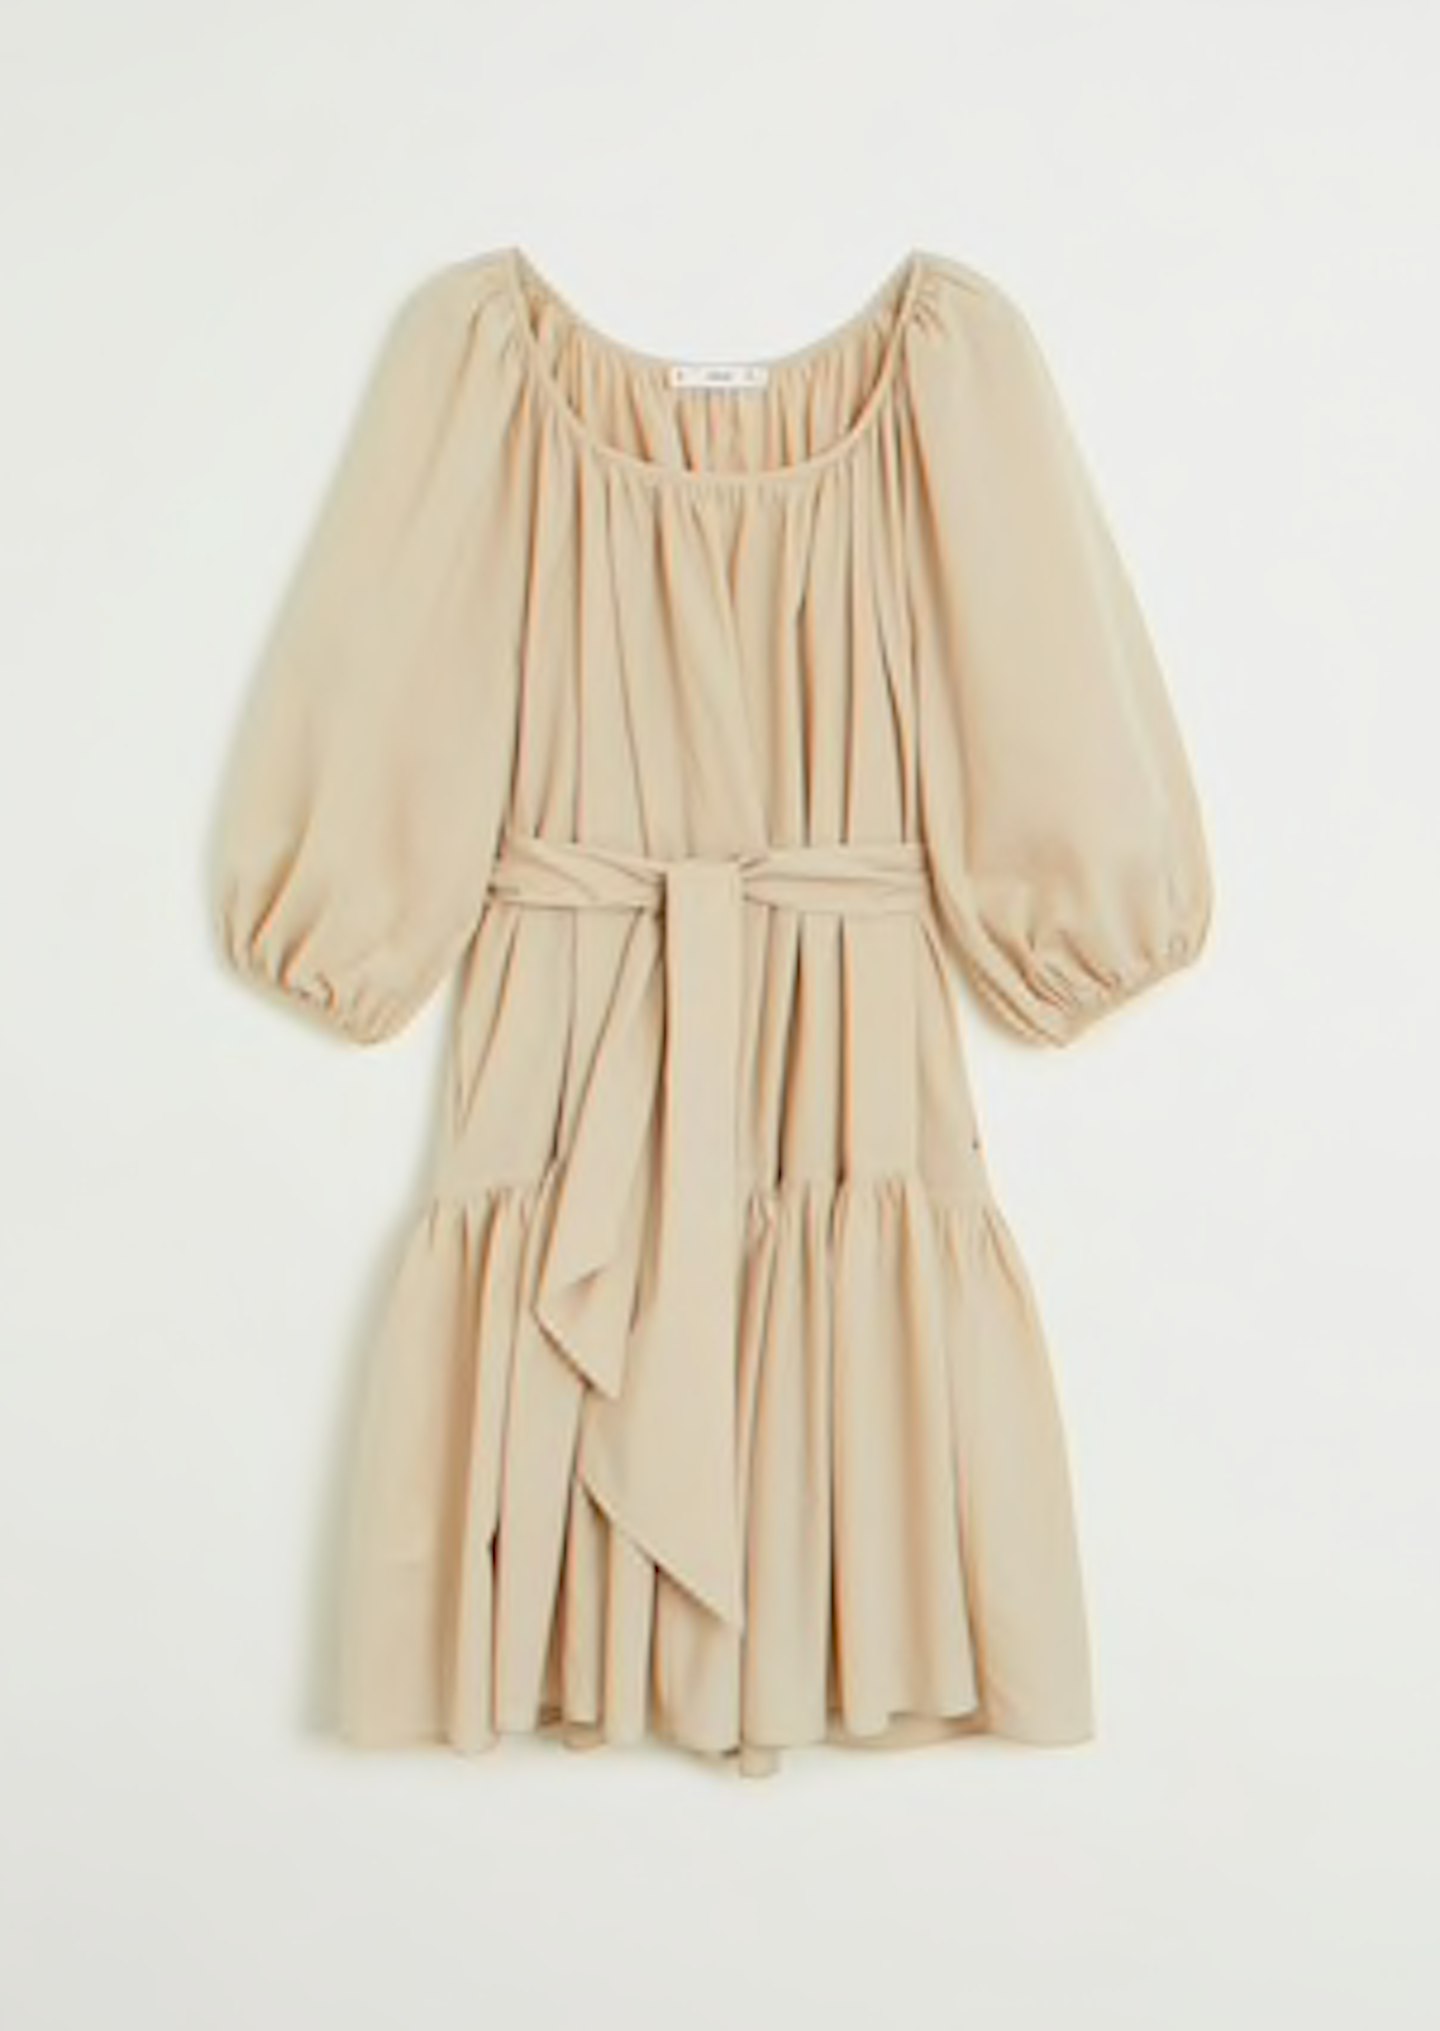 Mango, Puffed Sleeve Dress, £59.99